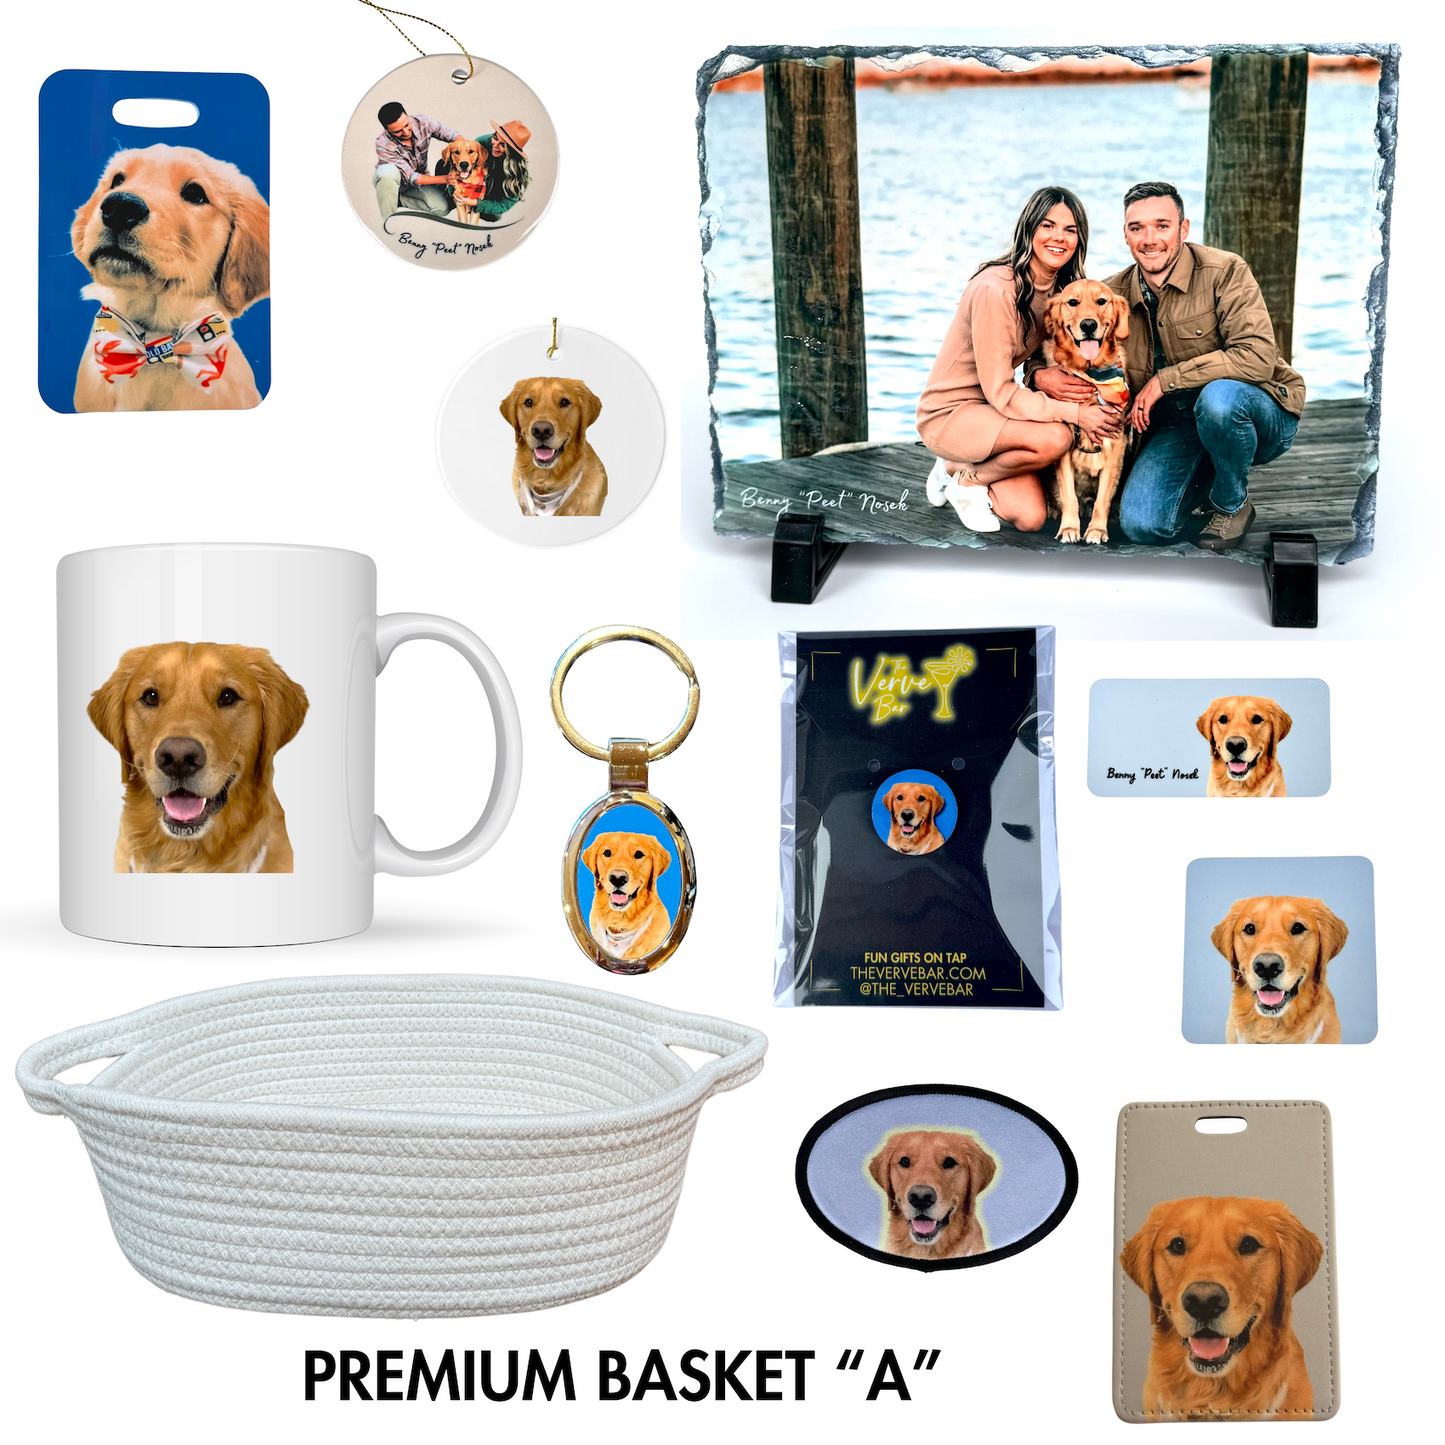 Pet Memory Basket / Gift Basket for Loss of Pet